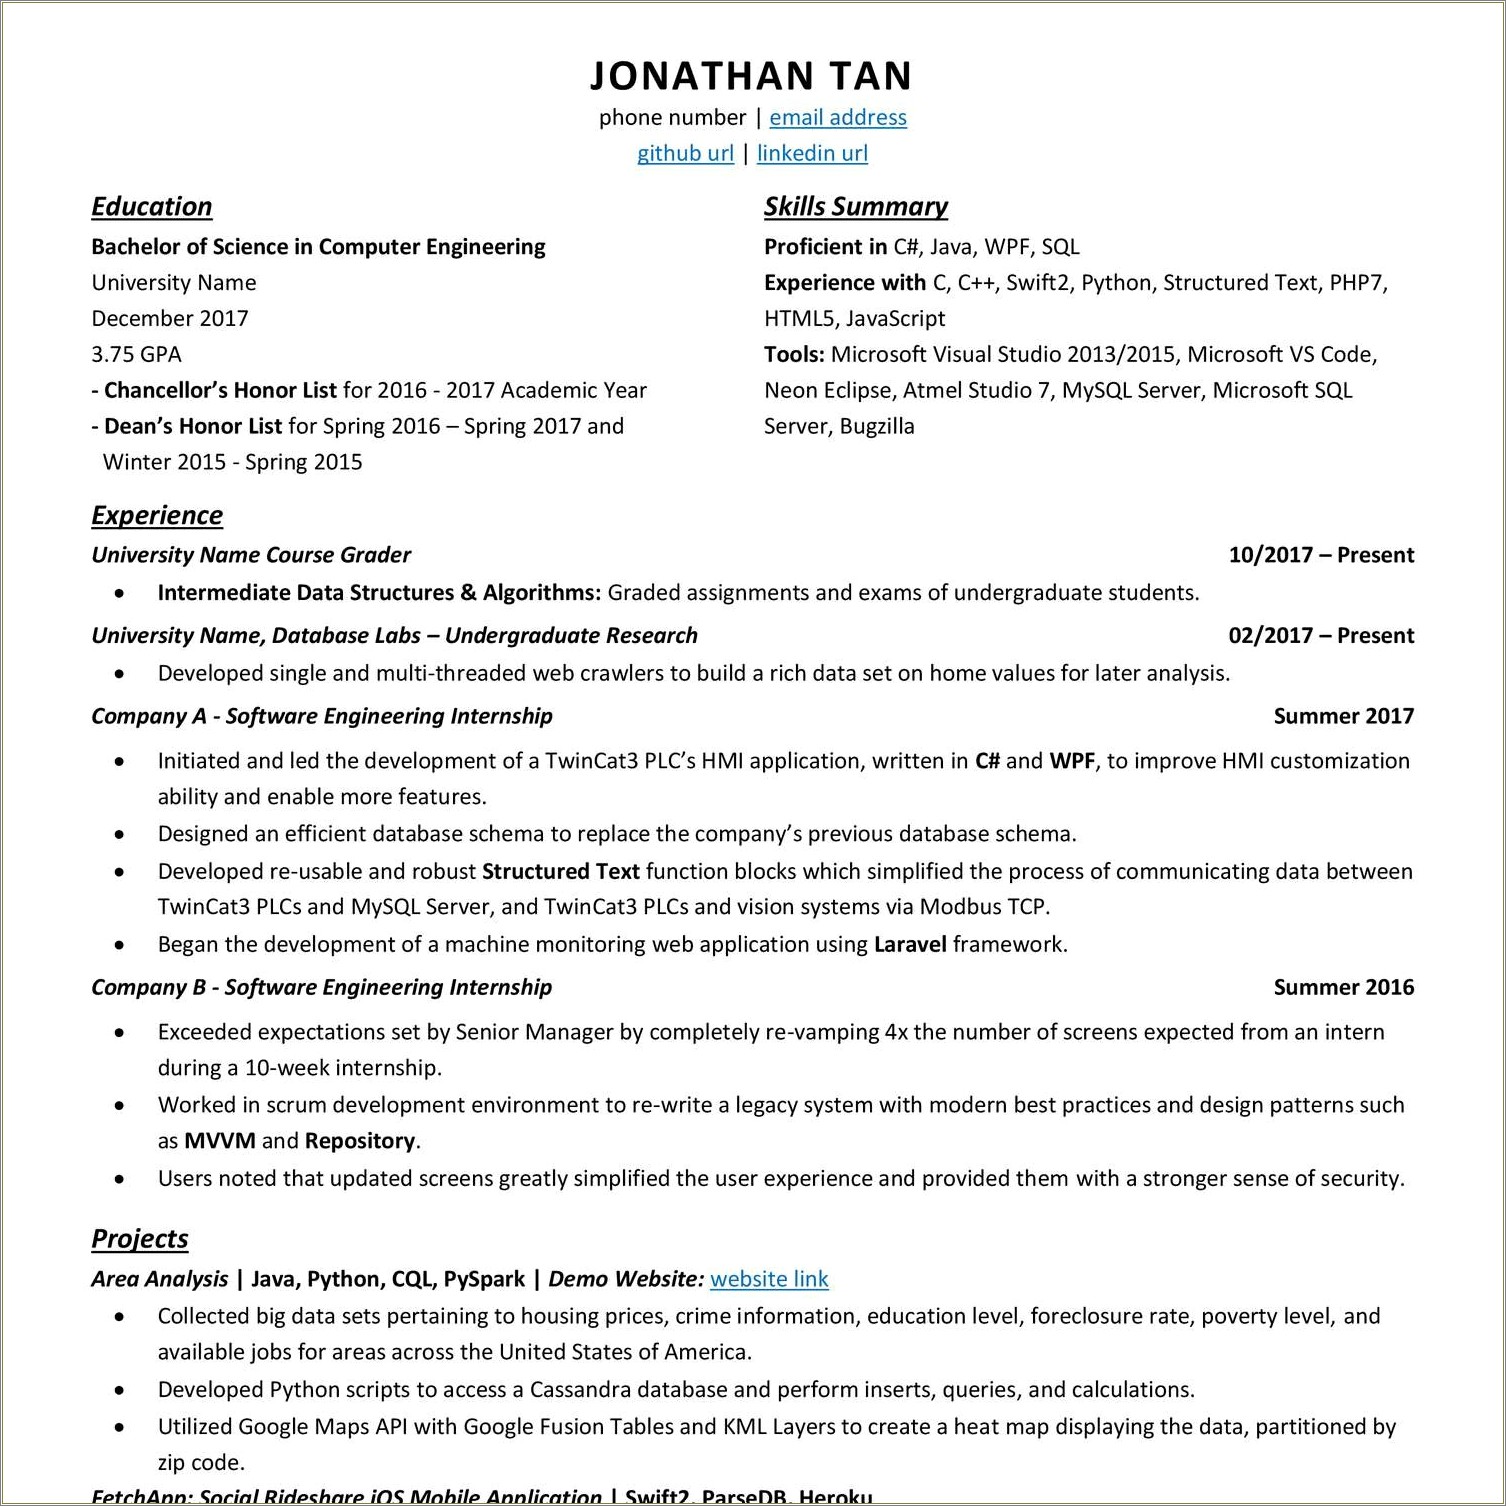 Copy And Paste Job Description In Resume Reddit